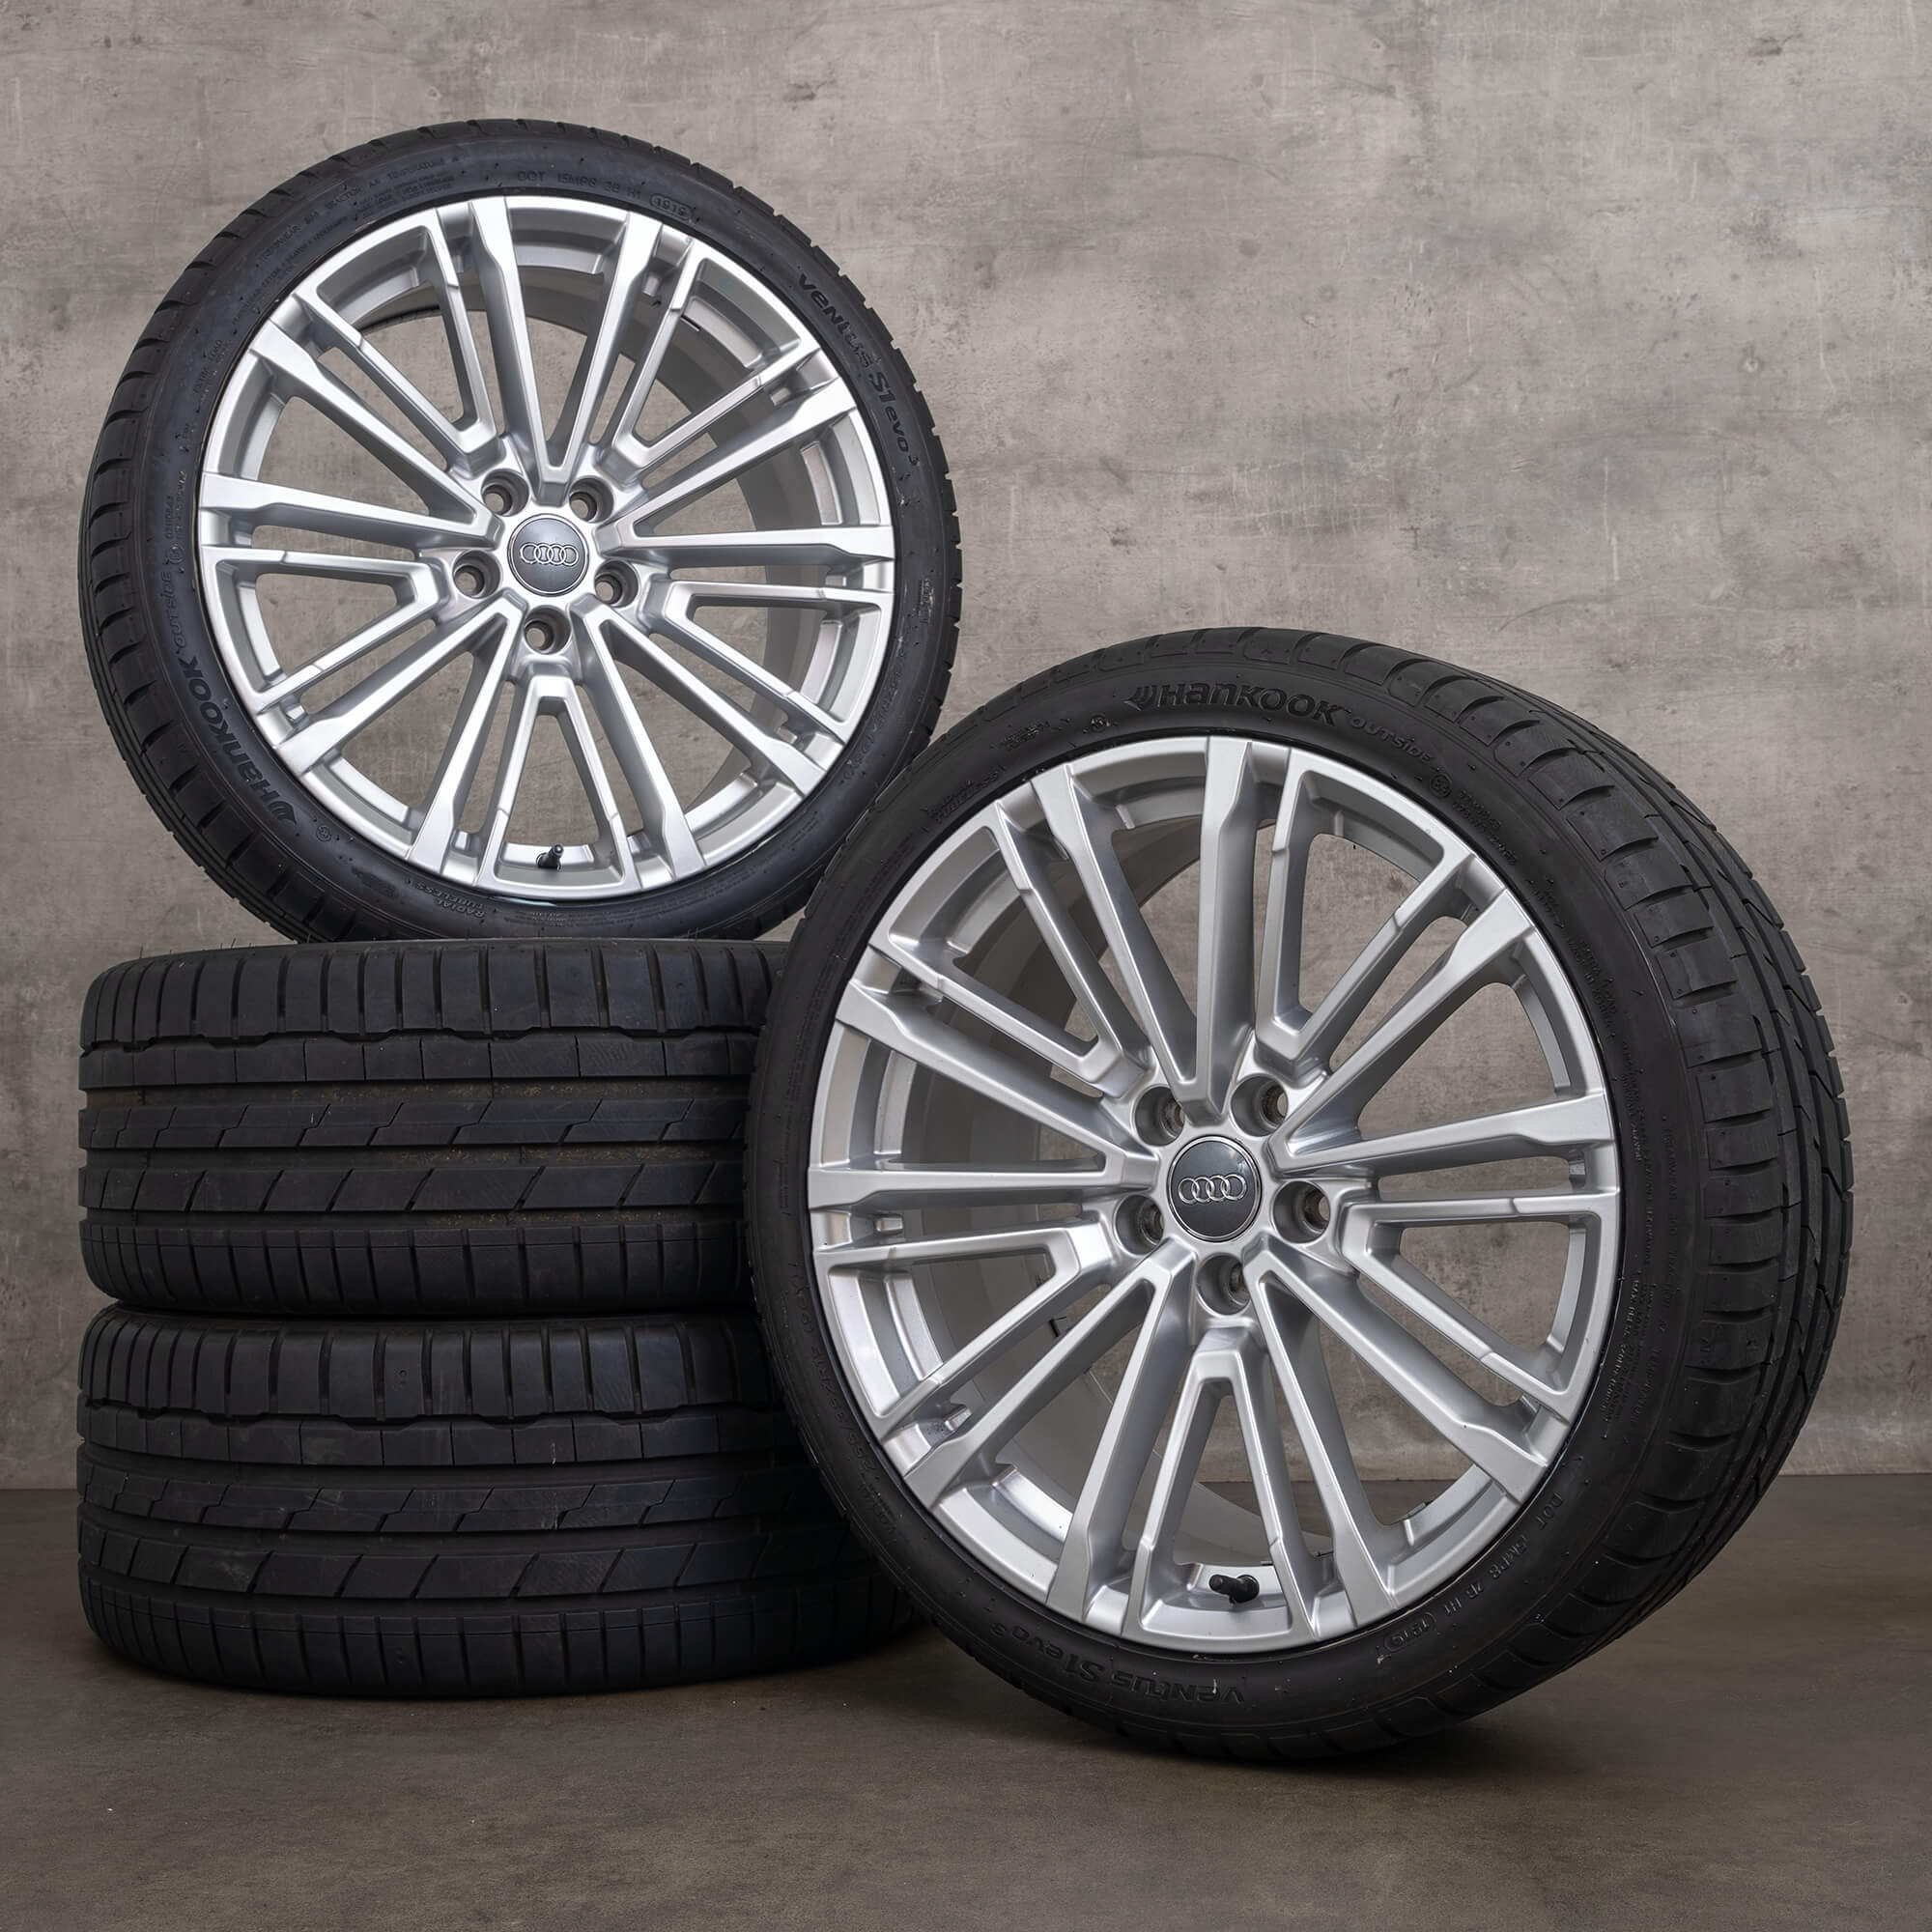 OEM Audi A5 S5 F5 19 inch summer tires rims 8W0601025CC silver